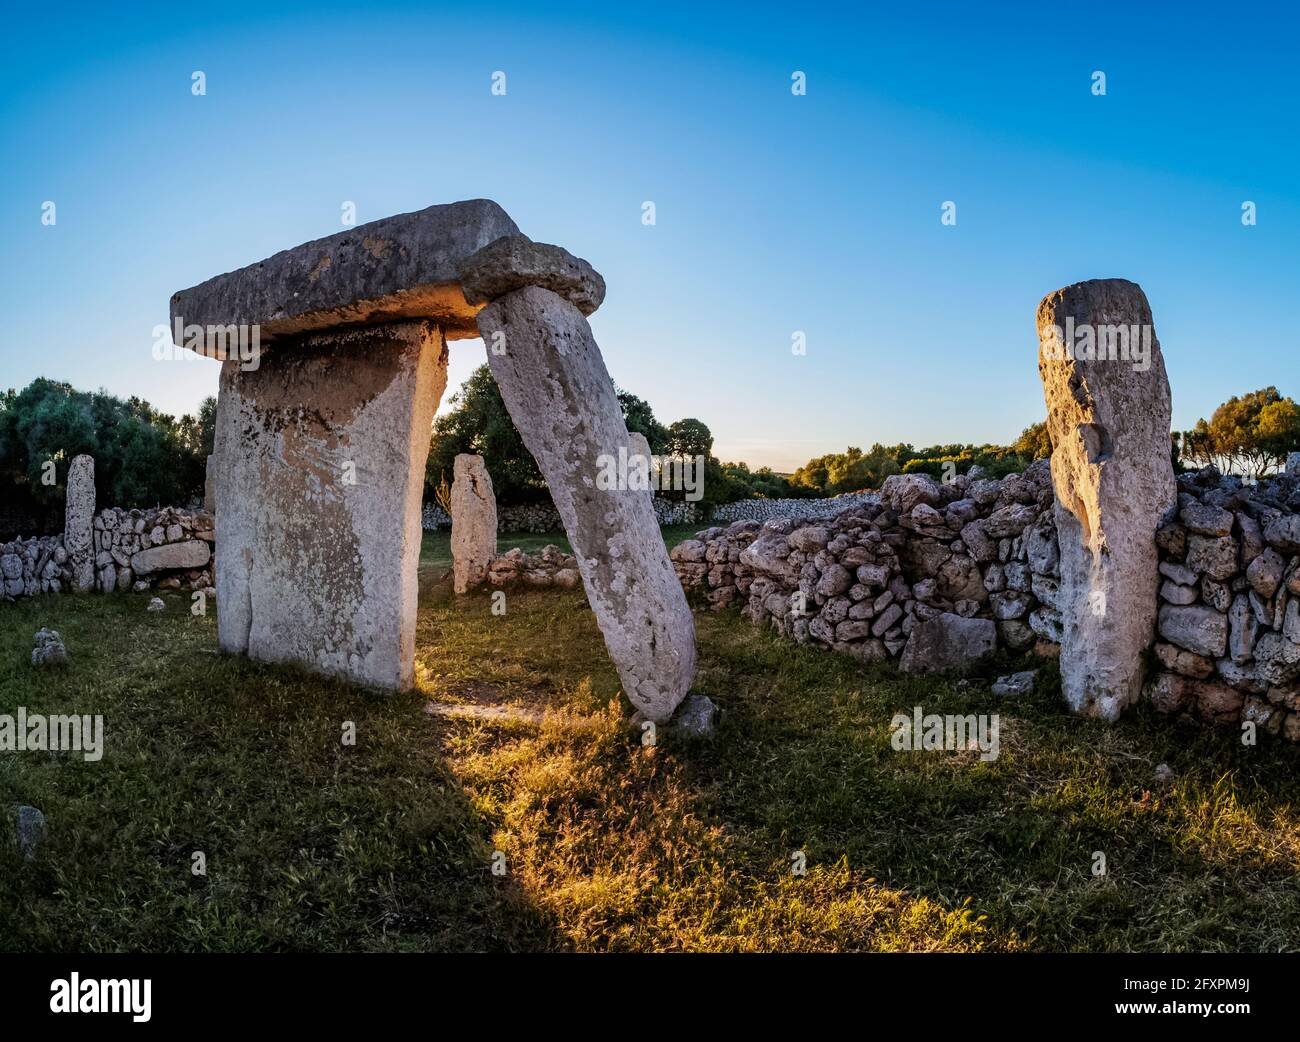 Taula bei Sonnenuntergang, archäologische Stätte von Talati de Dalt, Menorca (Menorca), Balearen, Spanien, Mittelmeer, Europa Stockfoto